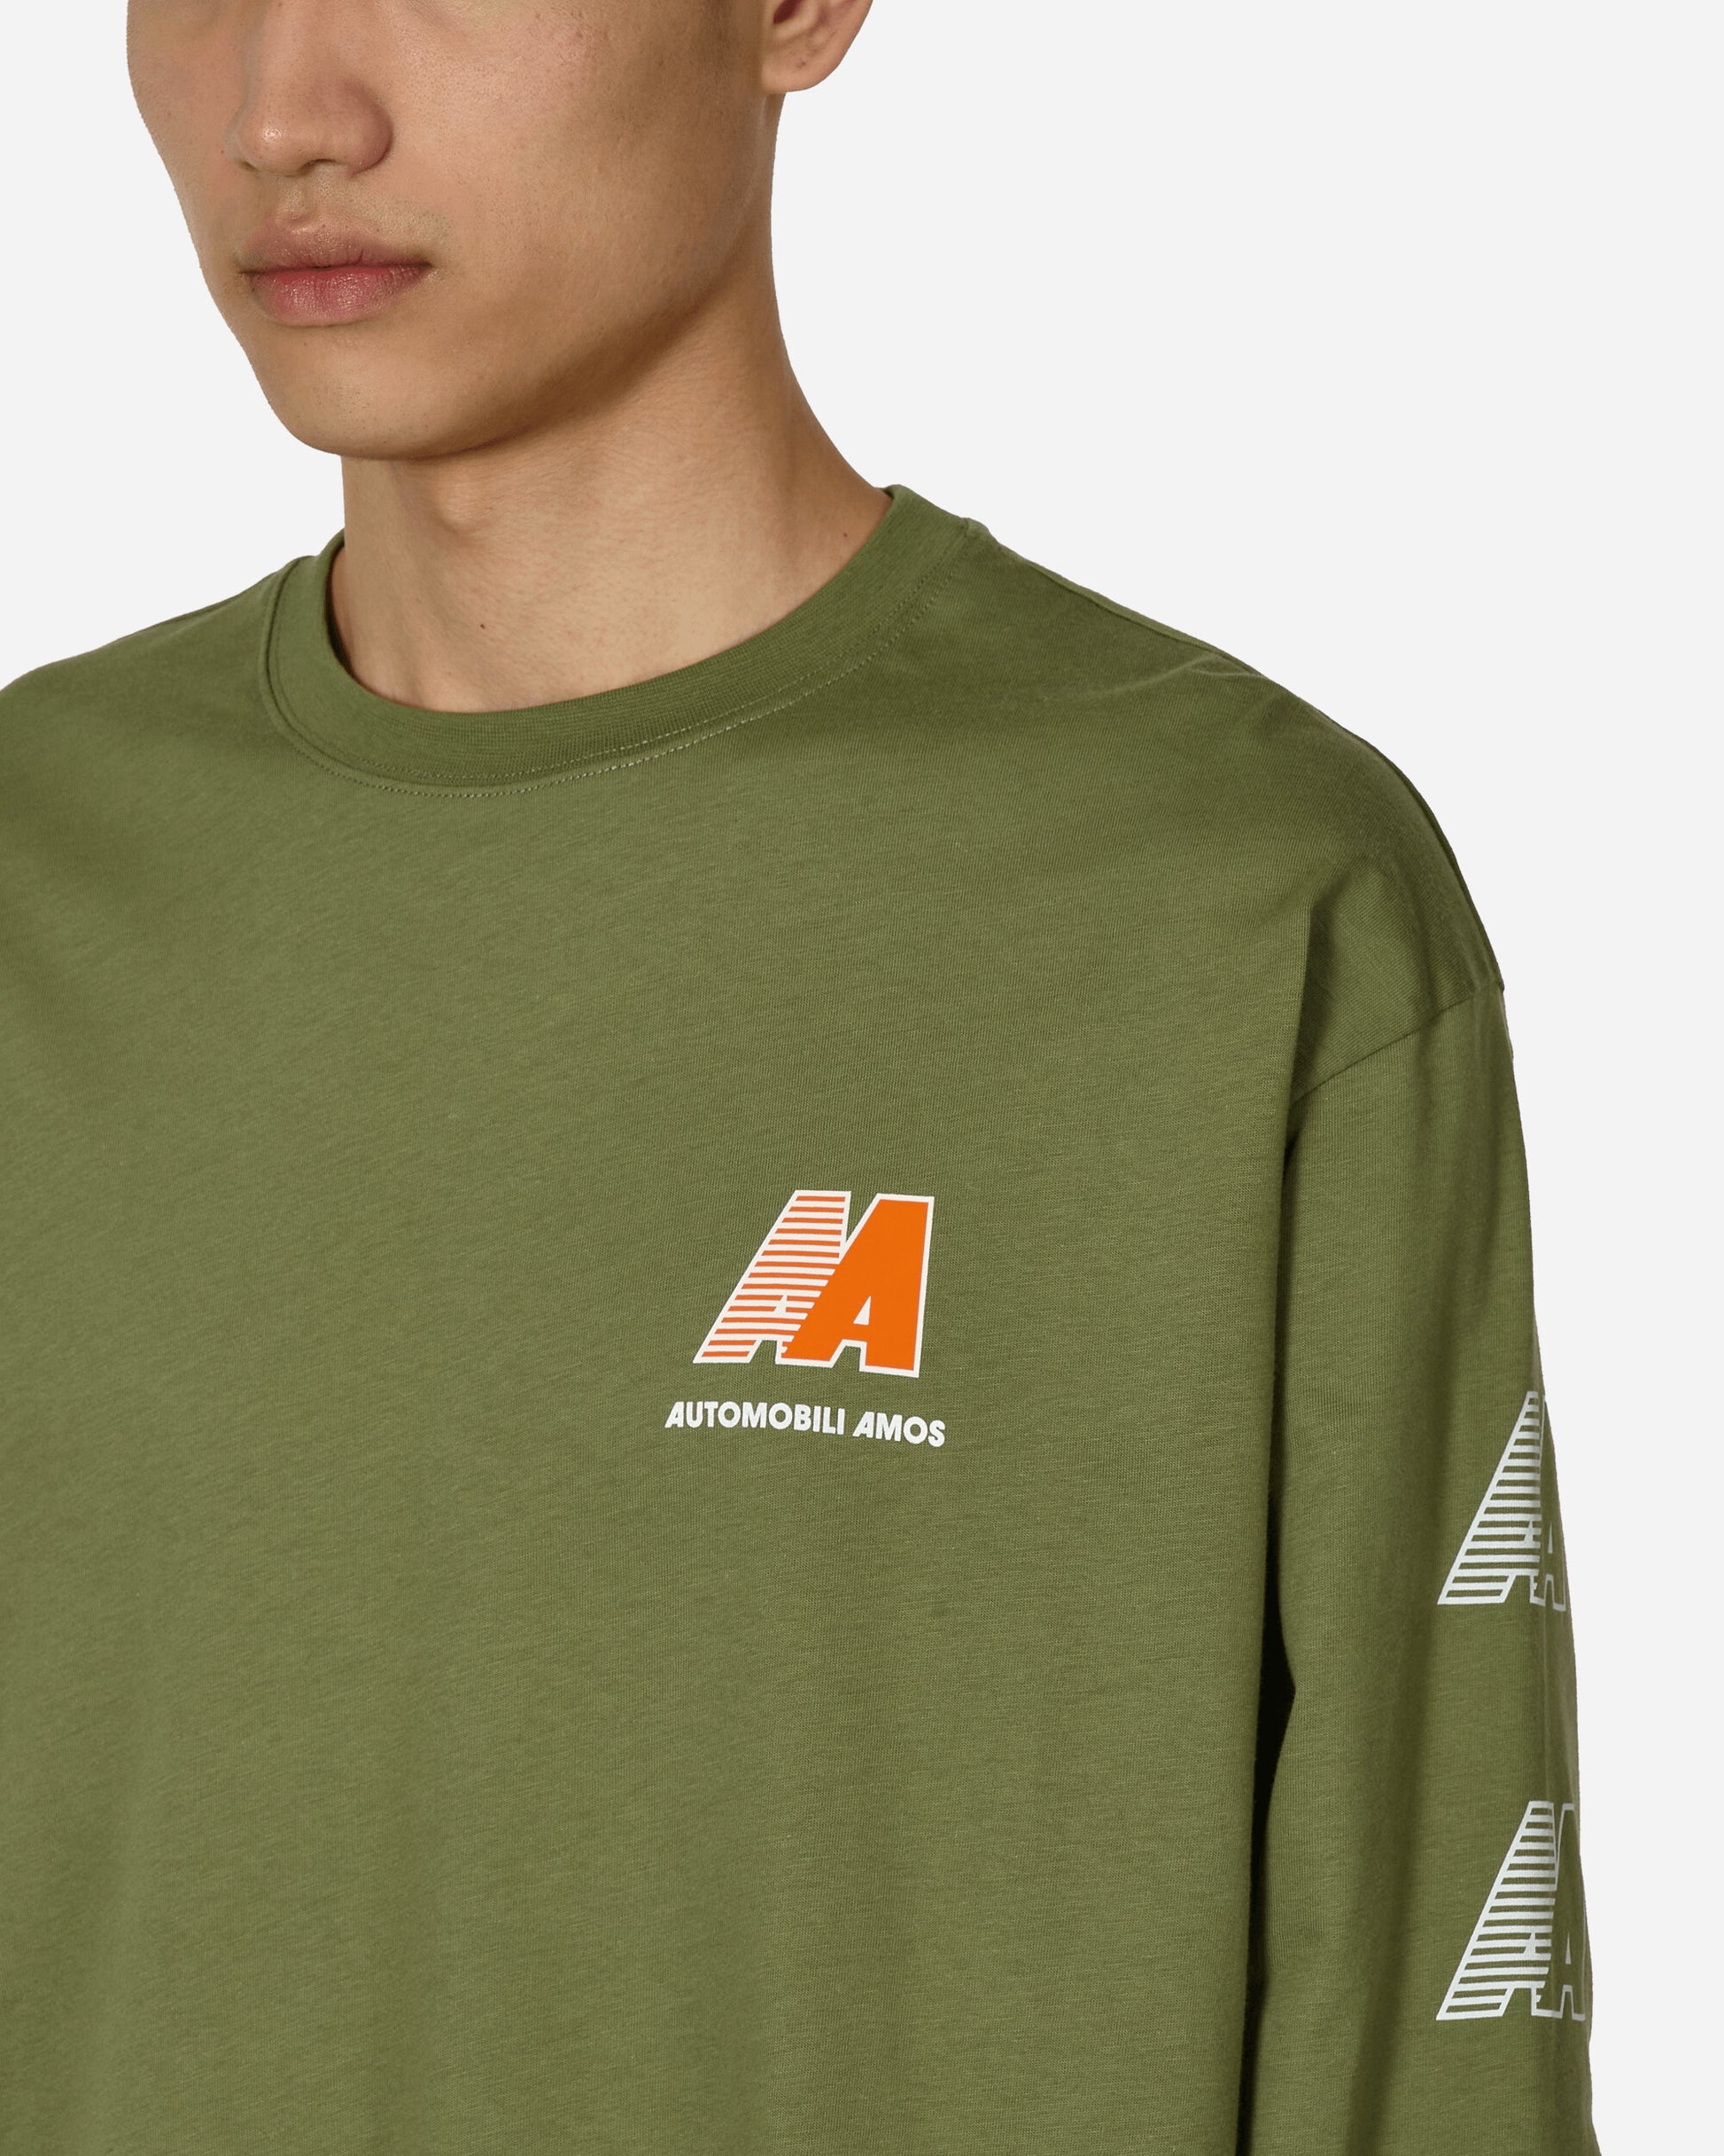 Automobili Amos Amos Long Sleeve Army T-Shirts Longsleeve C1AALS03 ARMY